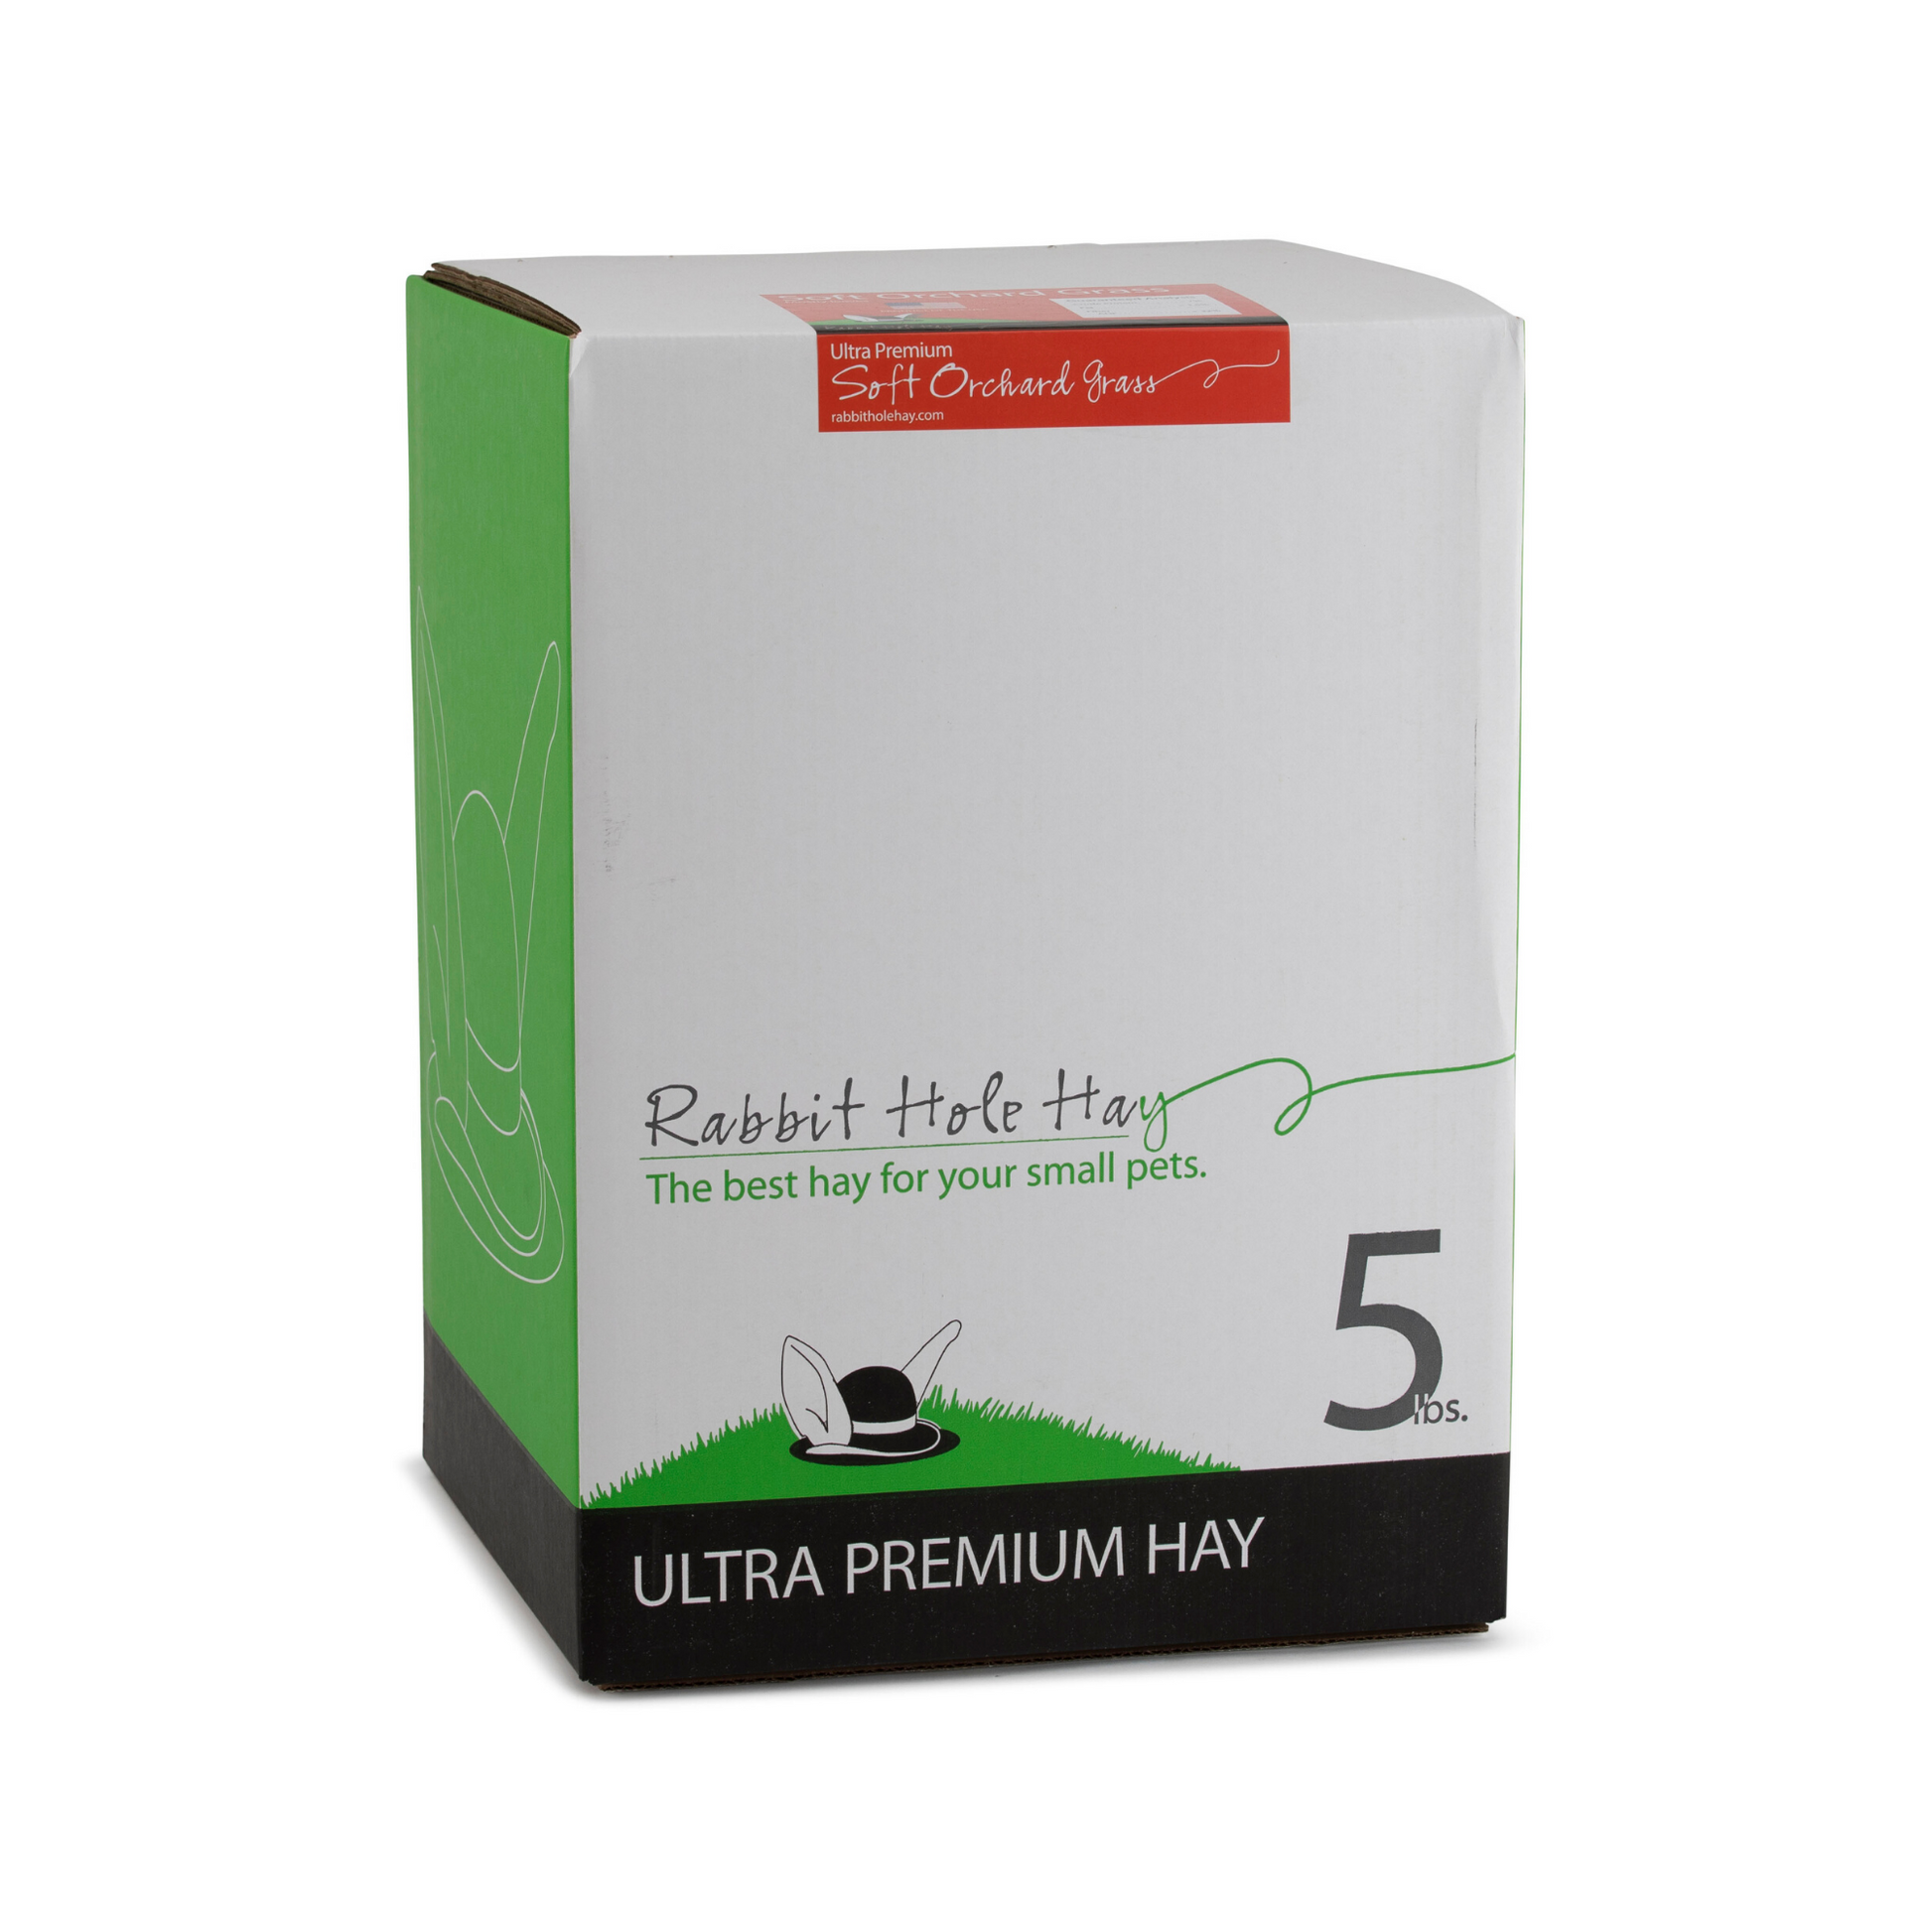 Ultra Premium Soft Orchard Grass - 5lbs